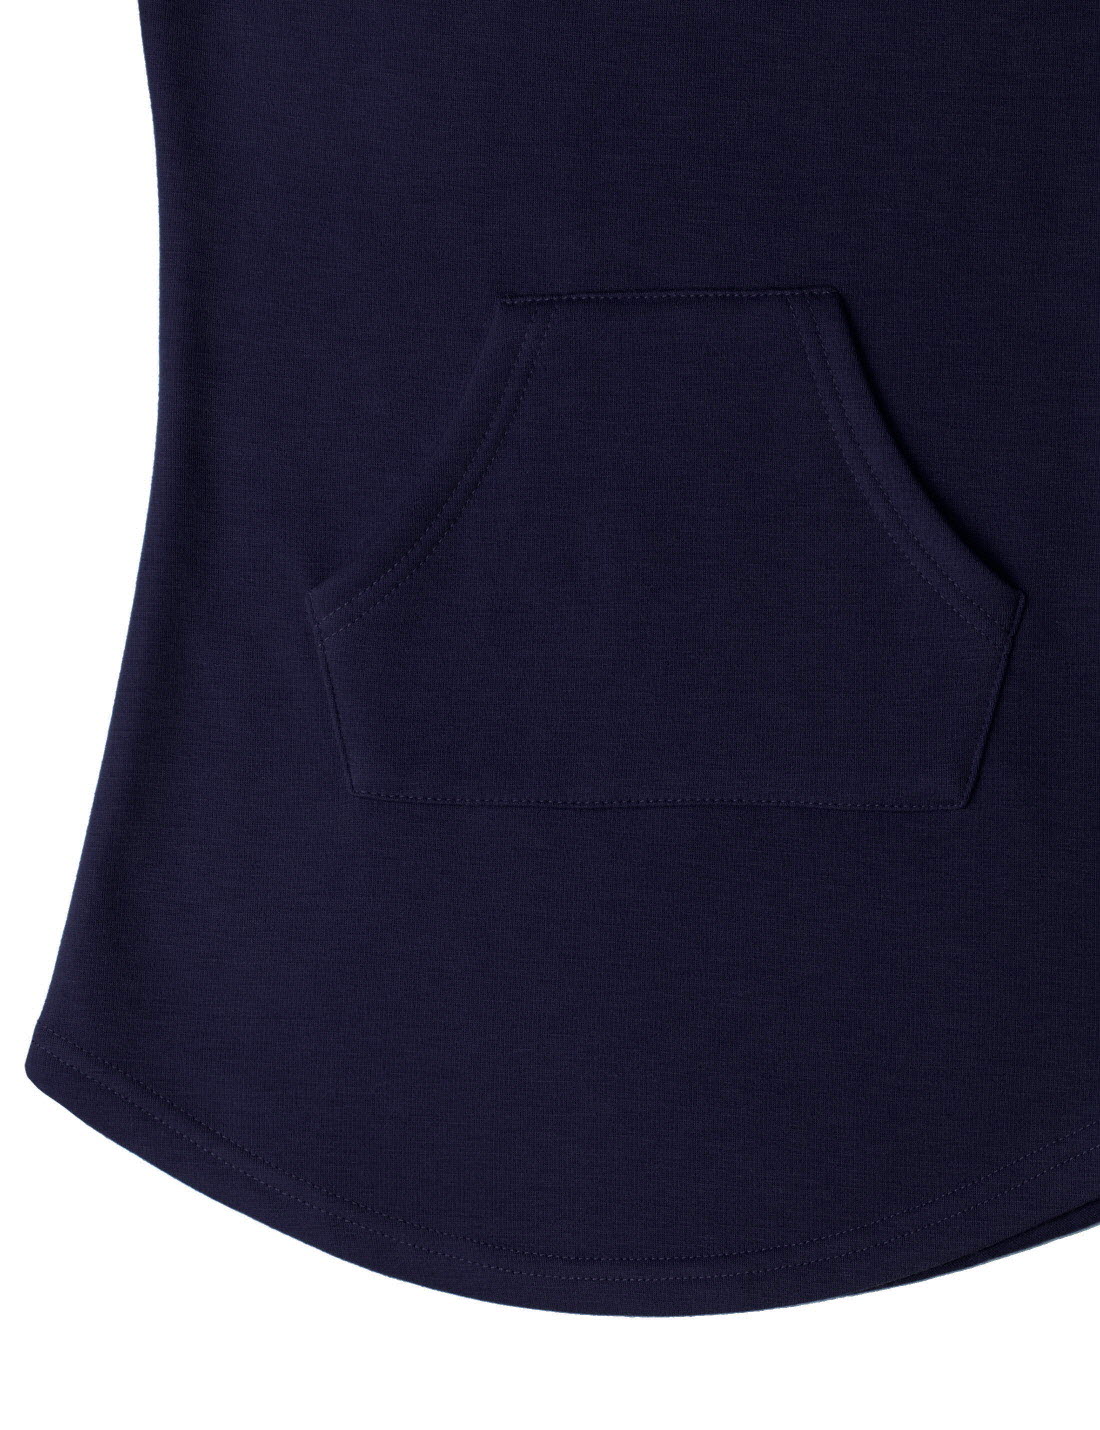 (NKWTT791) TheLees Women Comfy Fitted Tees Soft Fleece Zipup Turtleneck